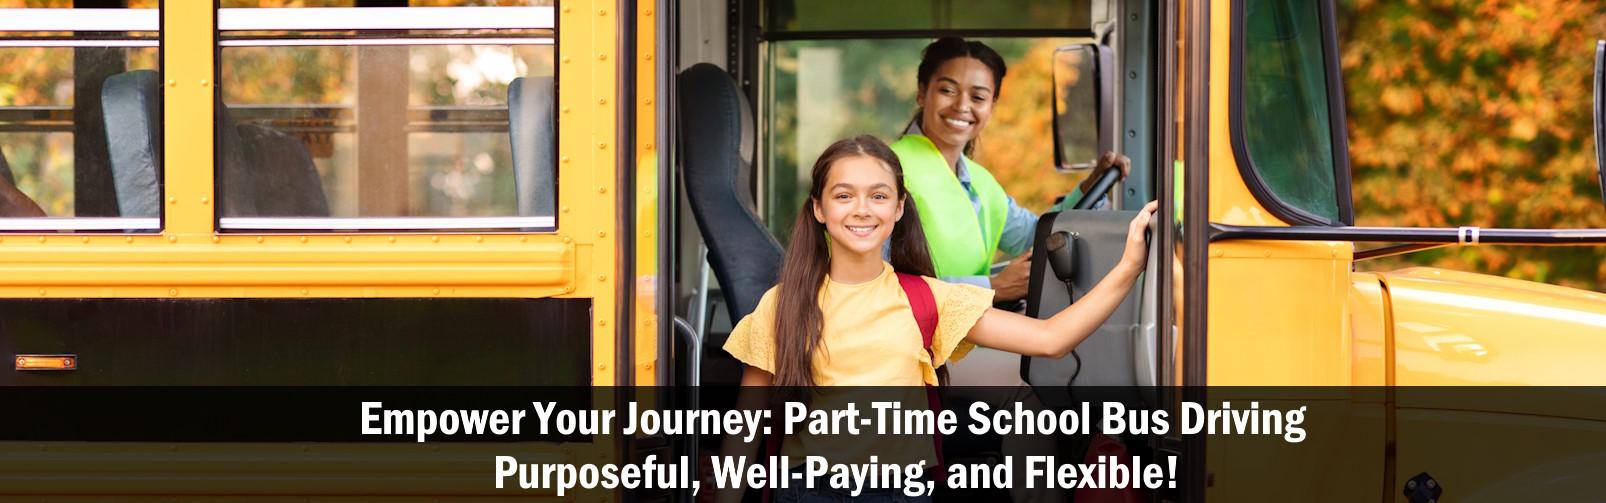 School Bus Driving Jobs for Parents, Part time jobs for parents